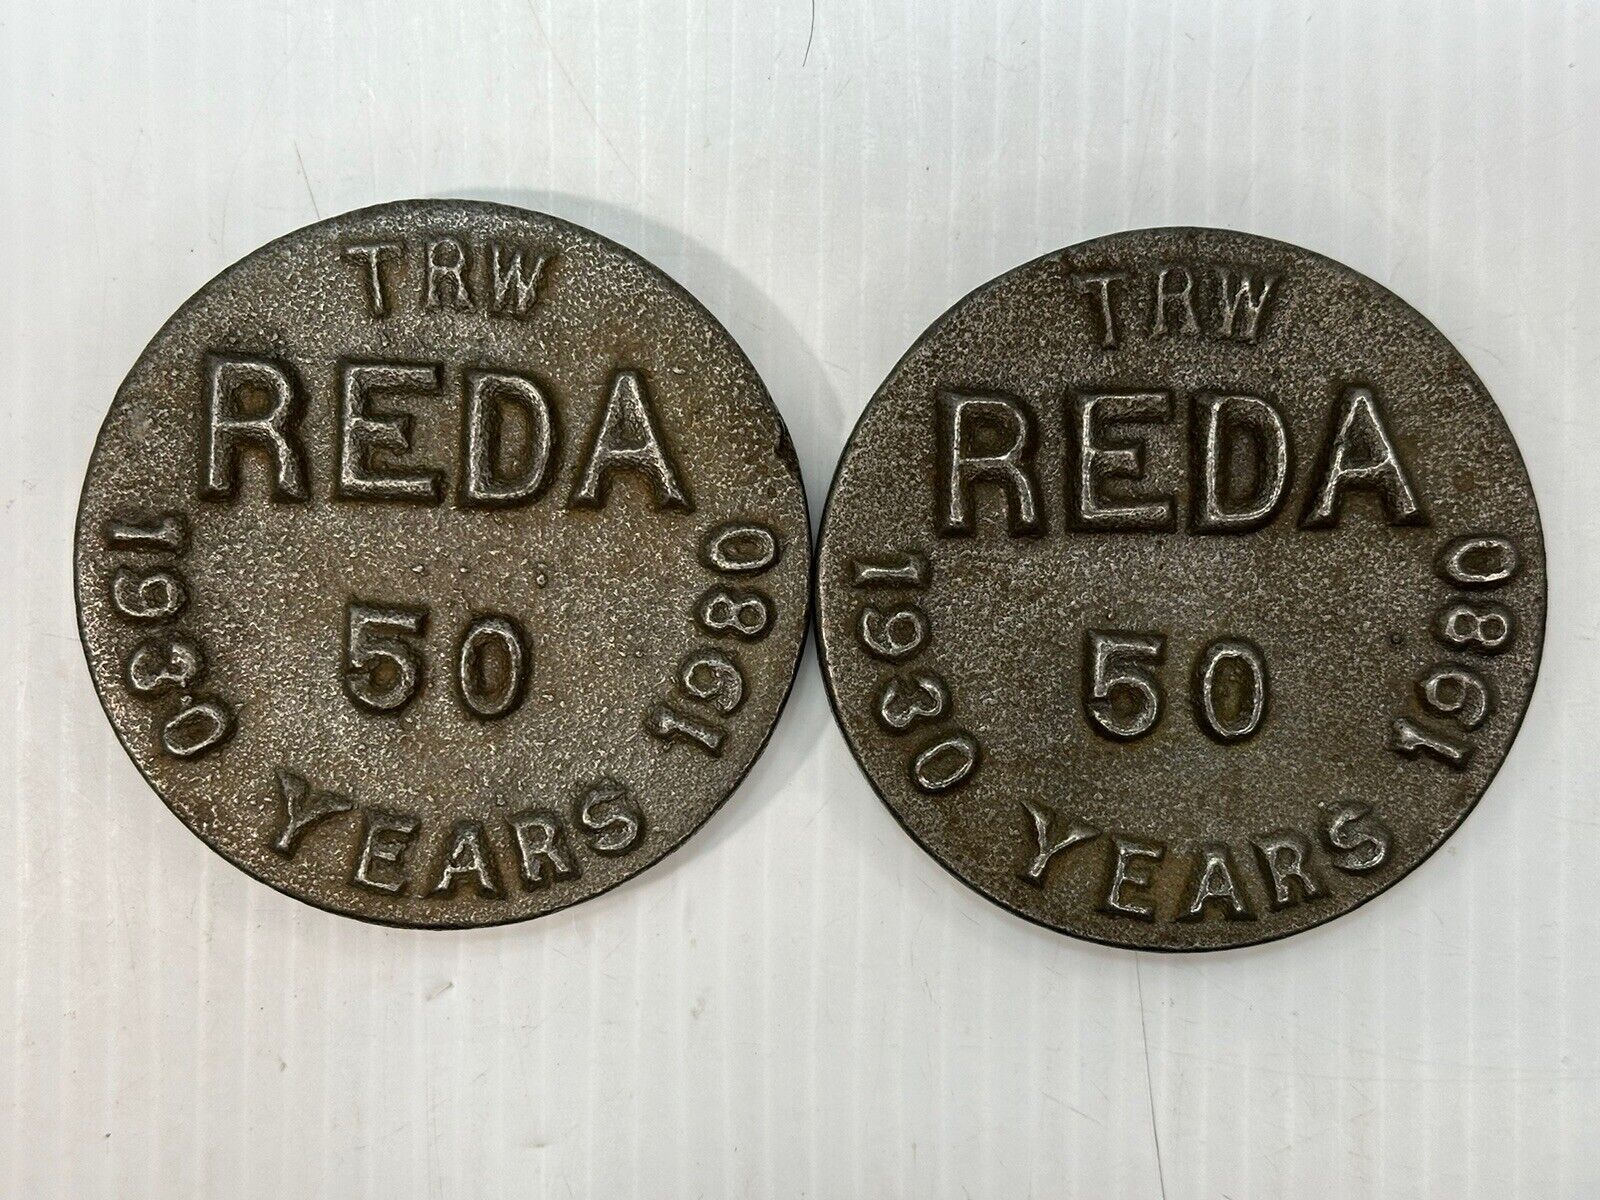 VINTAGE TRW REDA PUMP 50 YEARS 1930-1980 OILFIELD MEDALLIONS CELEBRATION METAL